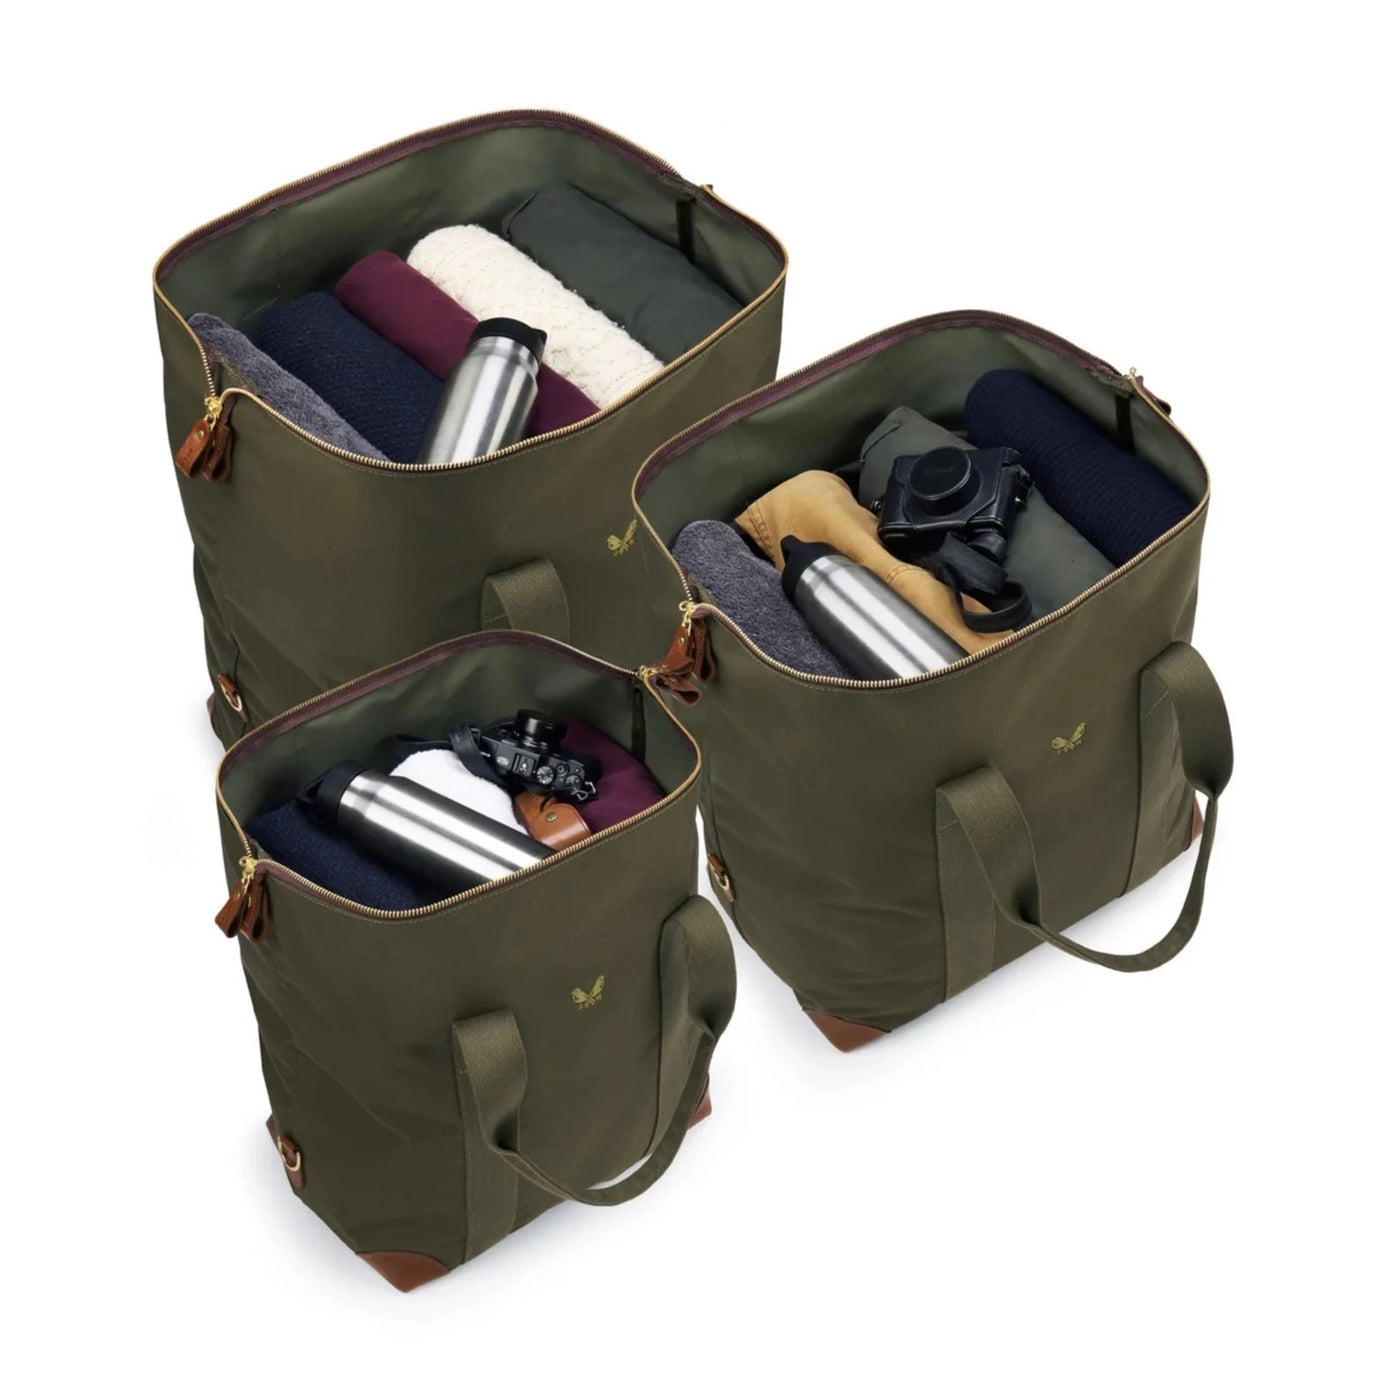 Bennett Winch Cargo Bag-Luggage-Kevin's Fine Outdoor Gear & Apparel